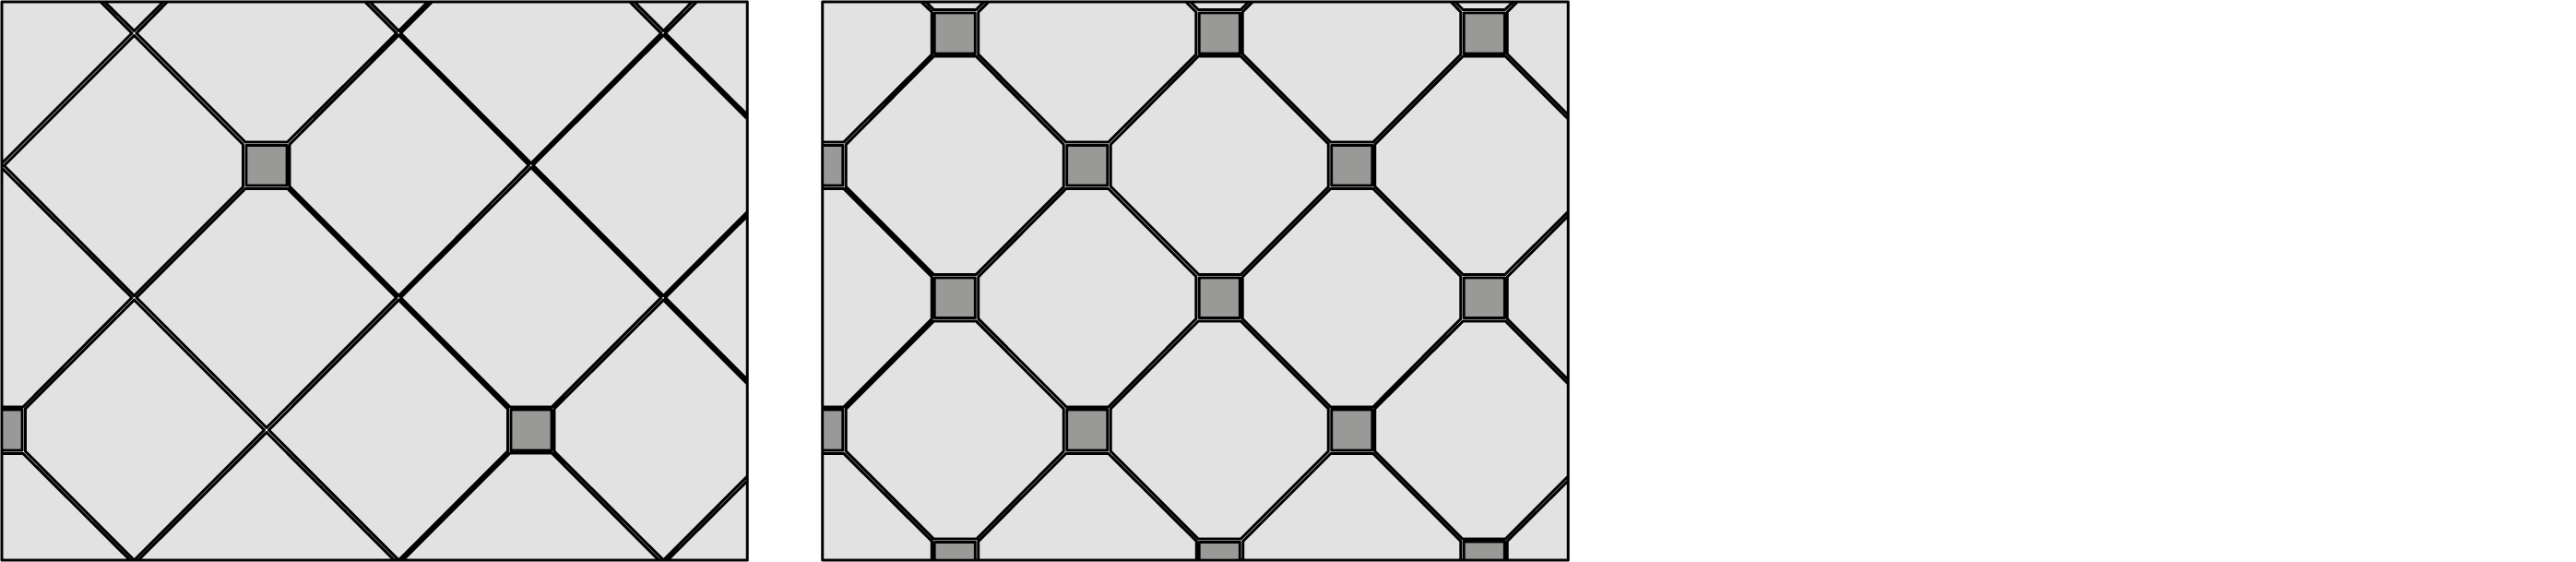 floor, pattern, layout, diagonal